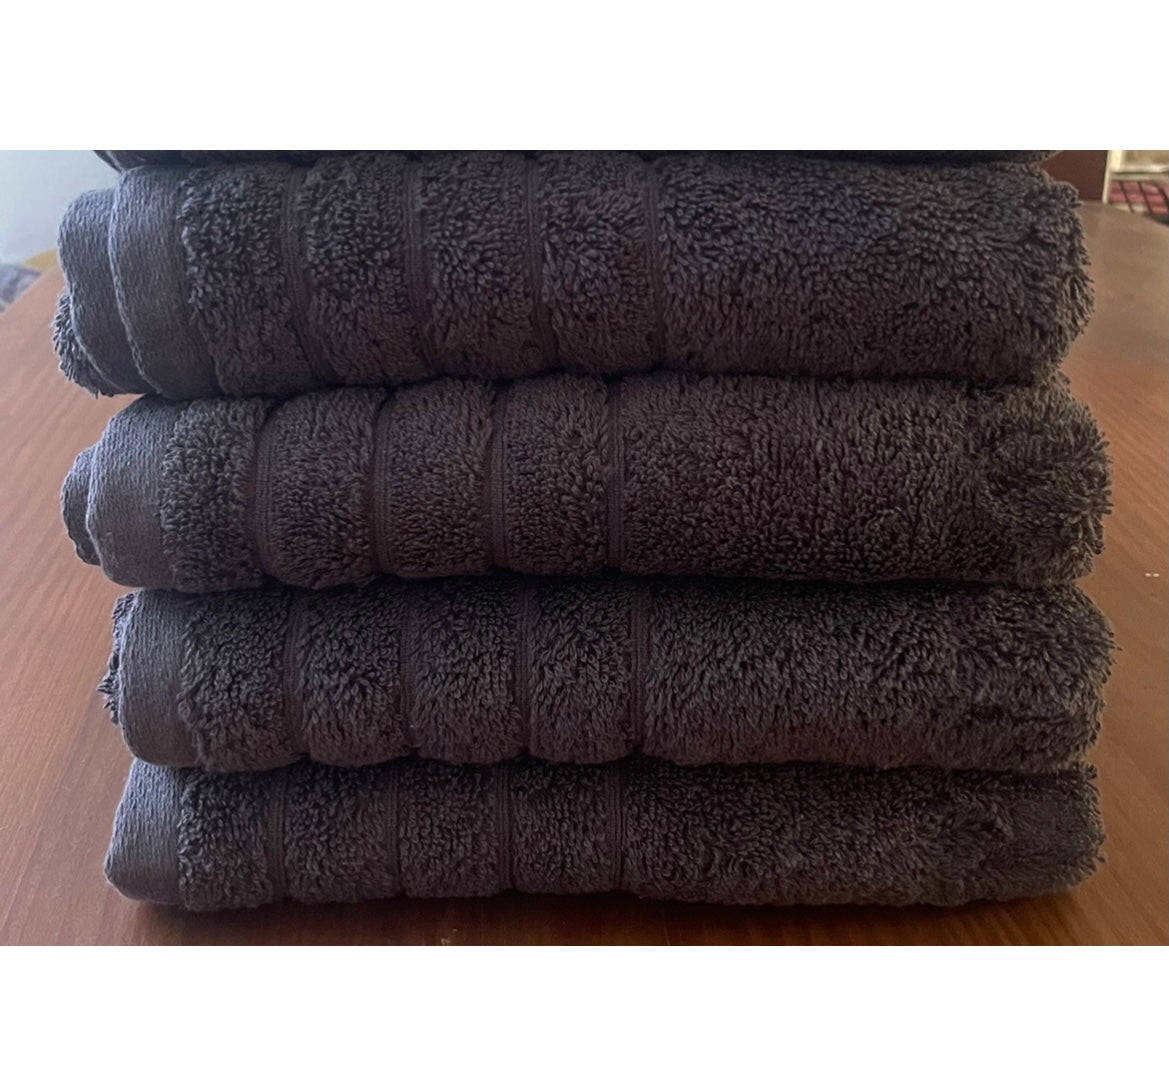 650g Cotton Towels - Dark Grey, 4 Hand Towels